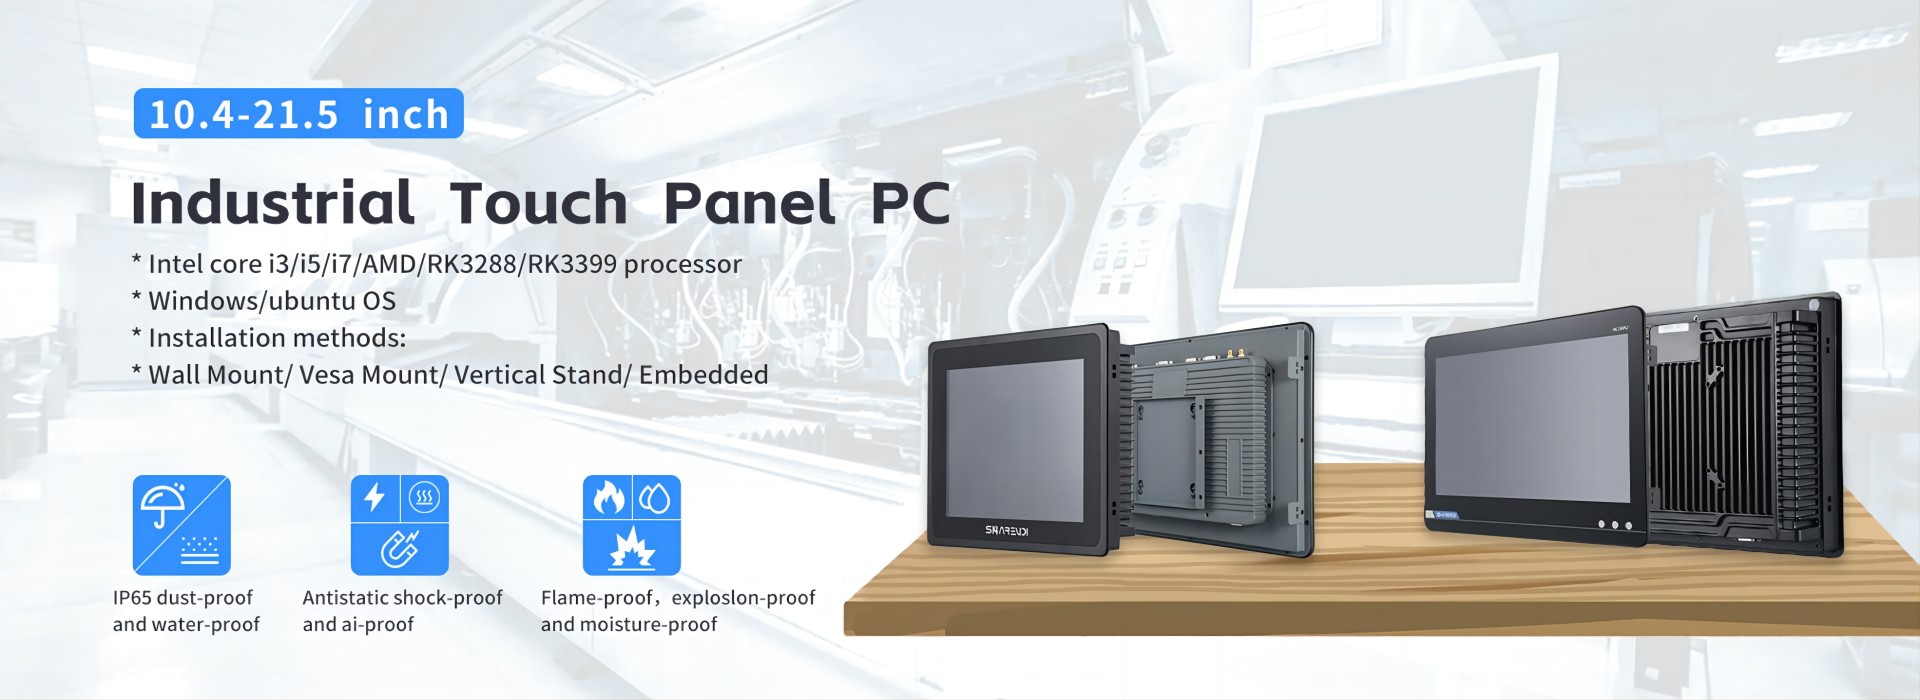 Panel PC